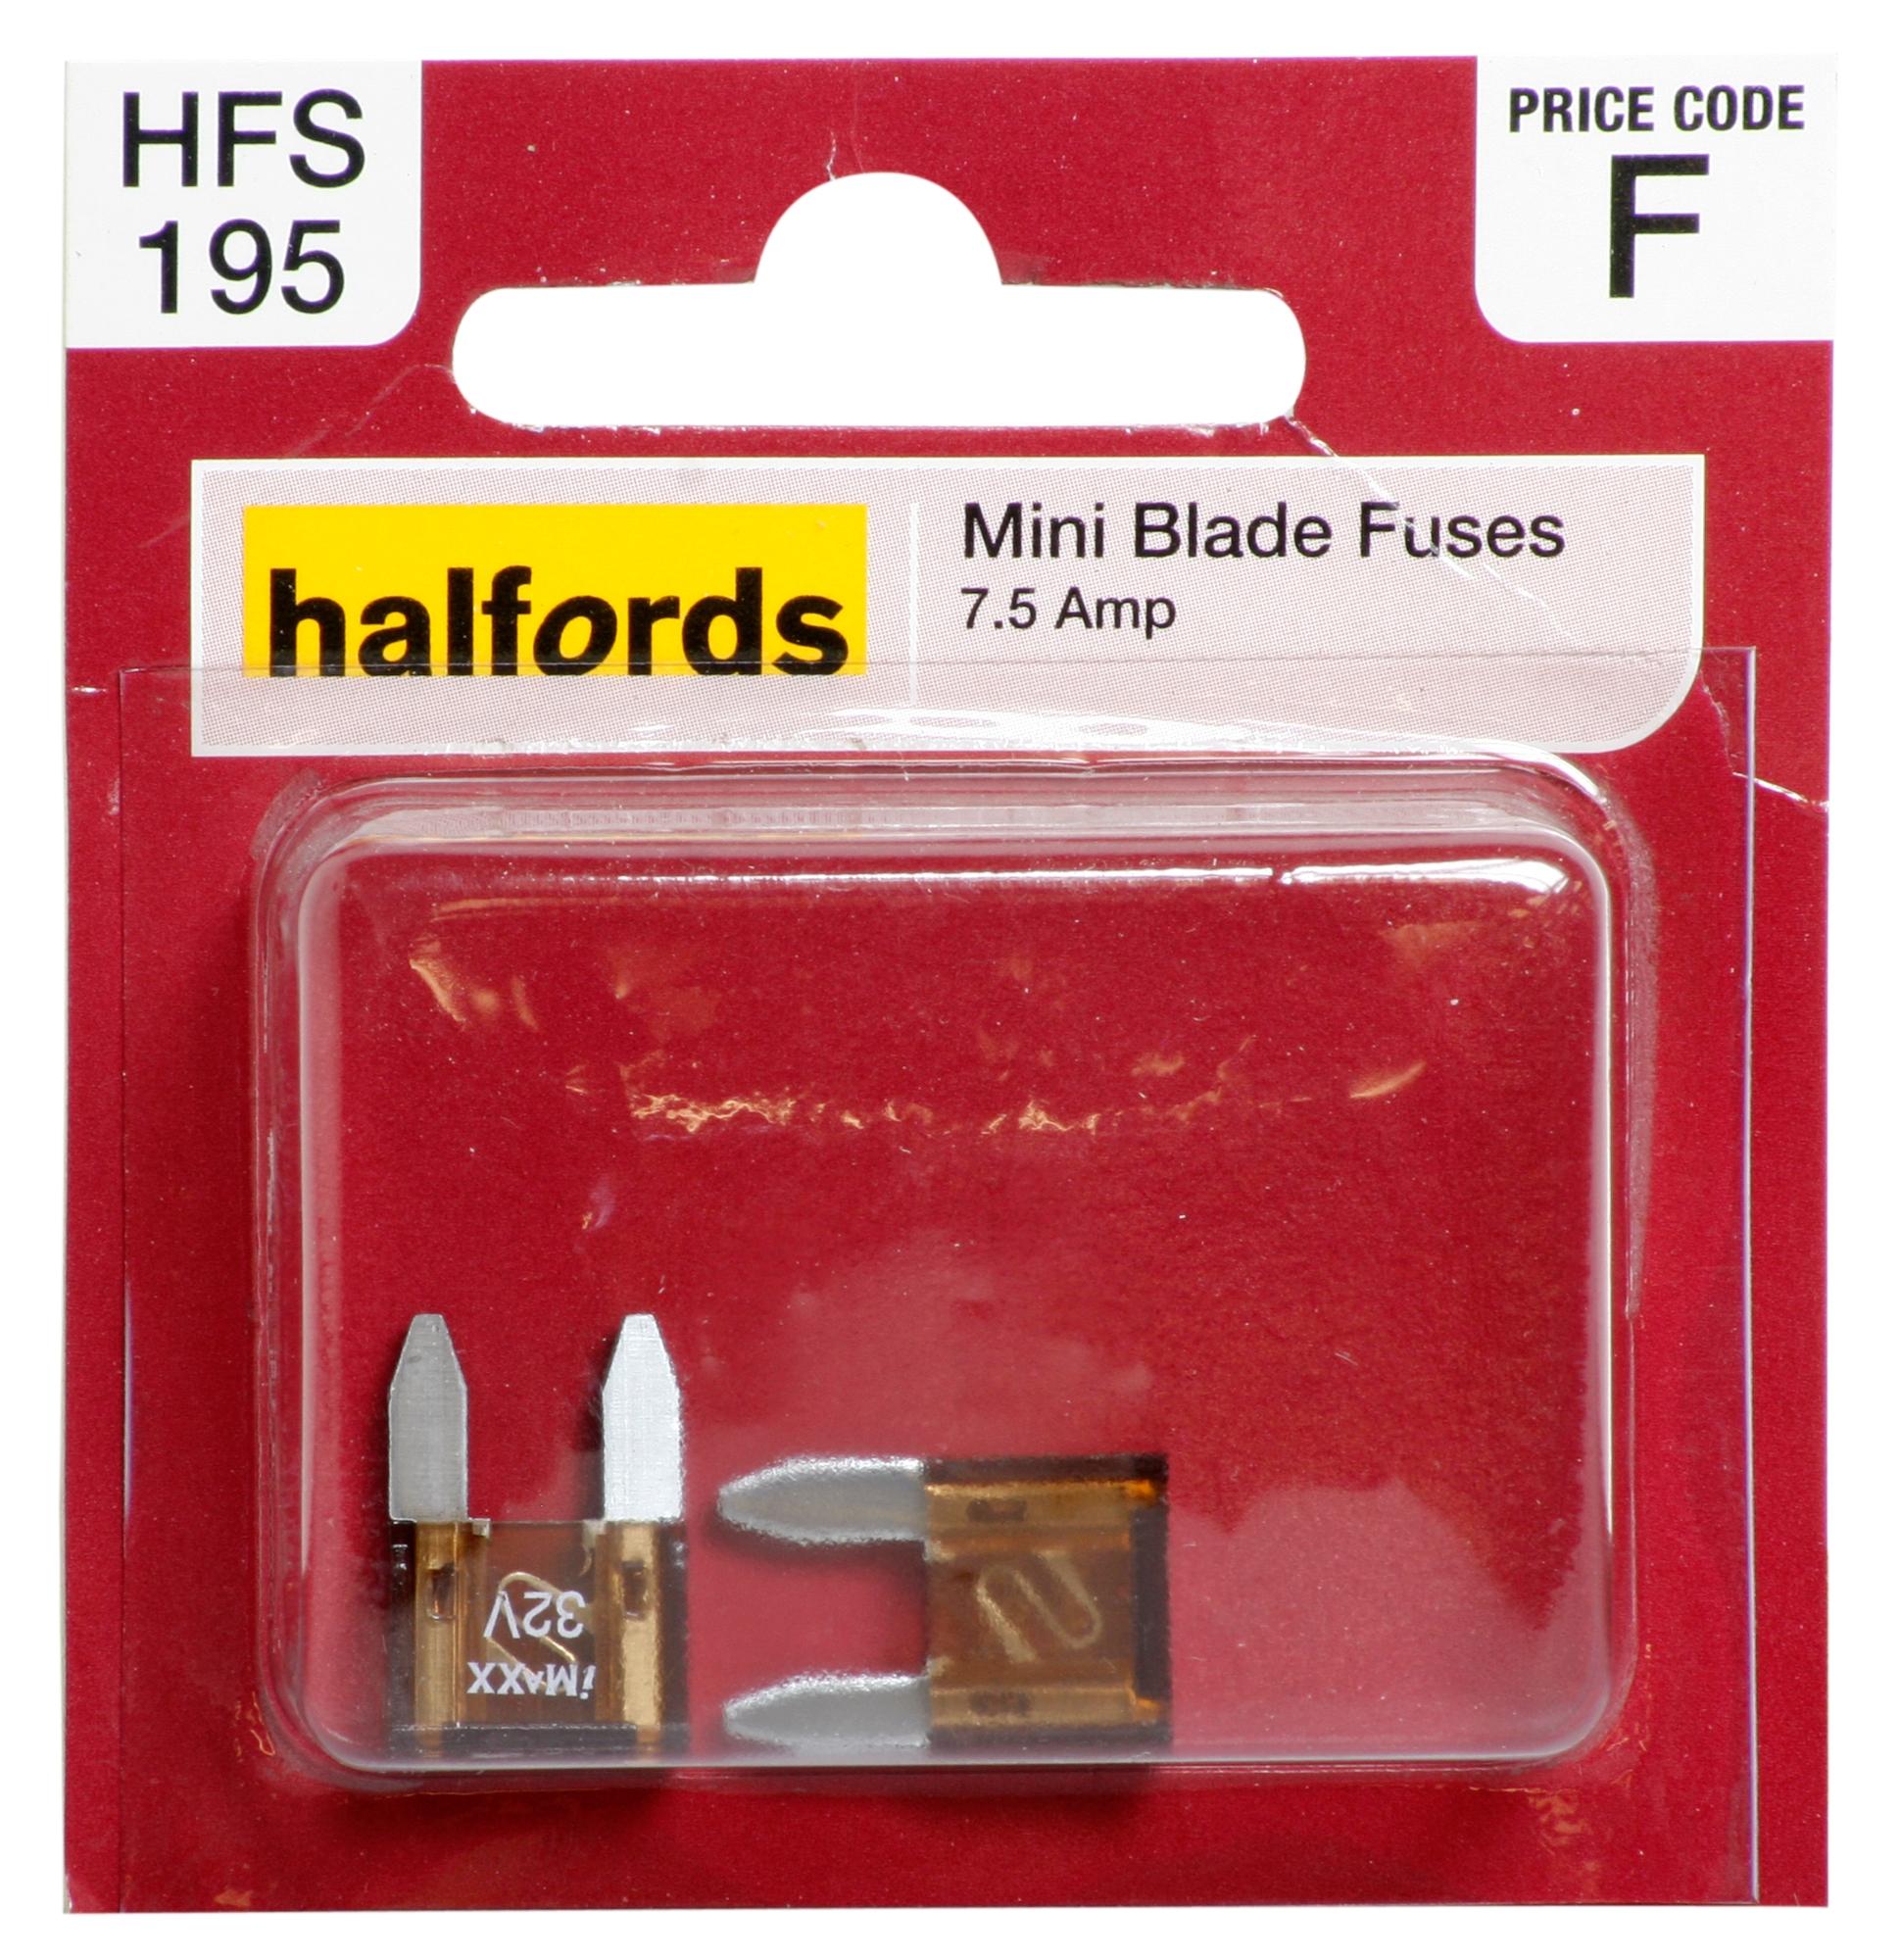 Halfords Mini Blade Fuses 7.5 Amp (Hfs195)